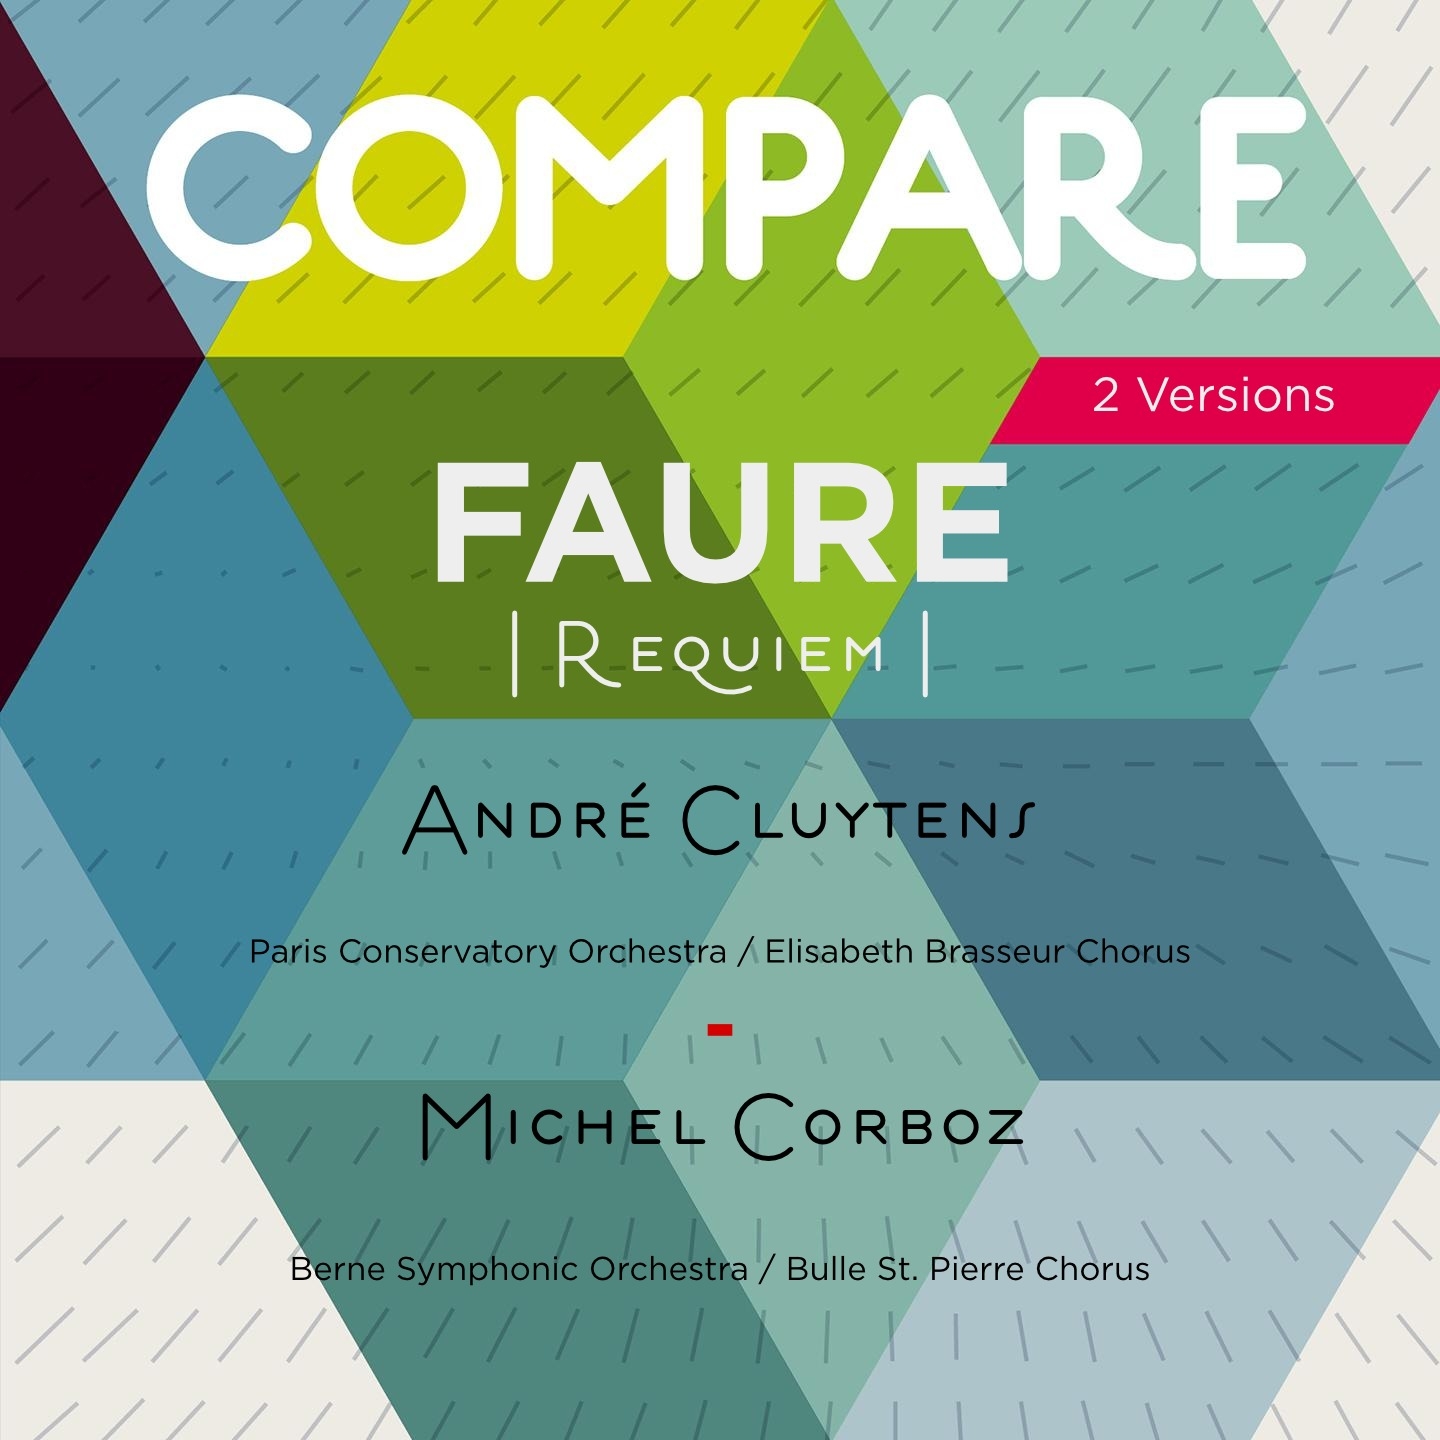 Faure: Requiem, Op. 48, Andre Cluytens vs. Michel Corboz Compare 2 Versions